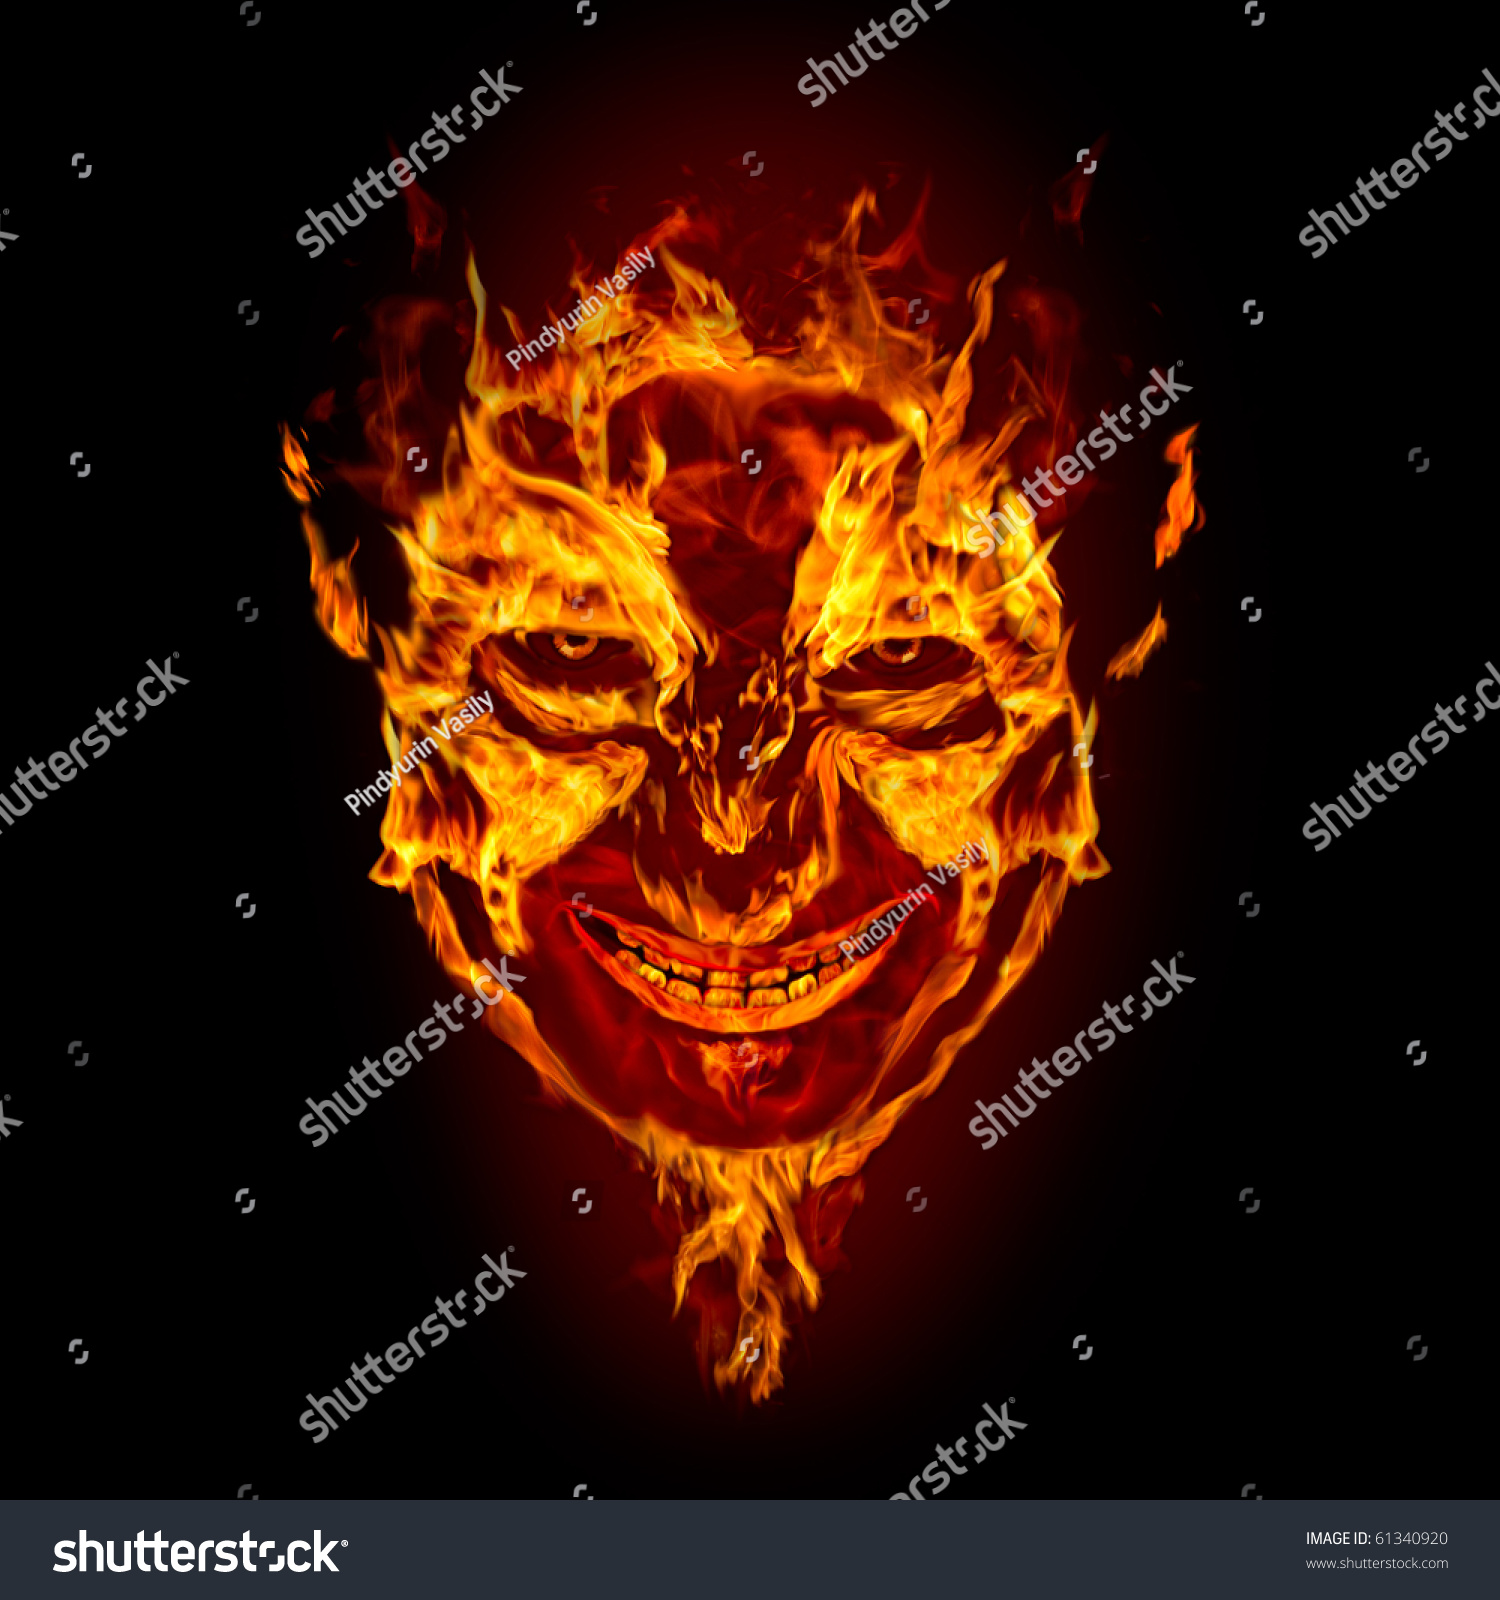 [Immagine: stock-photo-fire-devil-face-on-black-bac...340920.jpg]